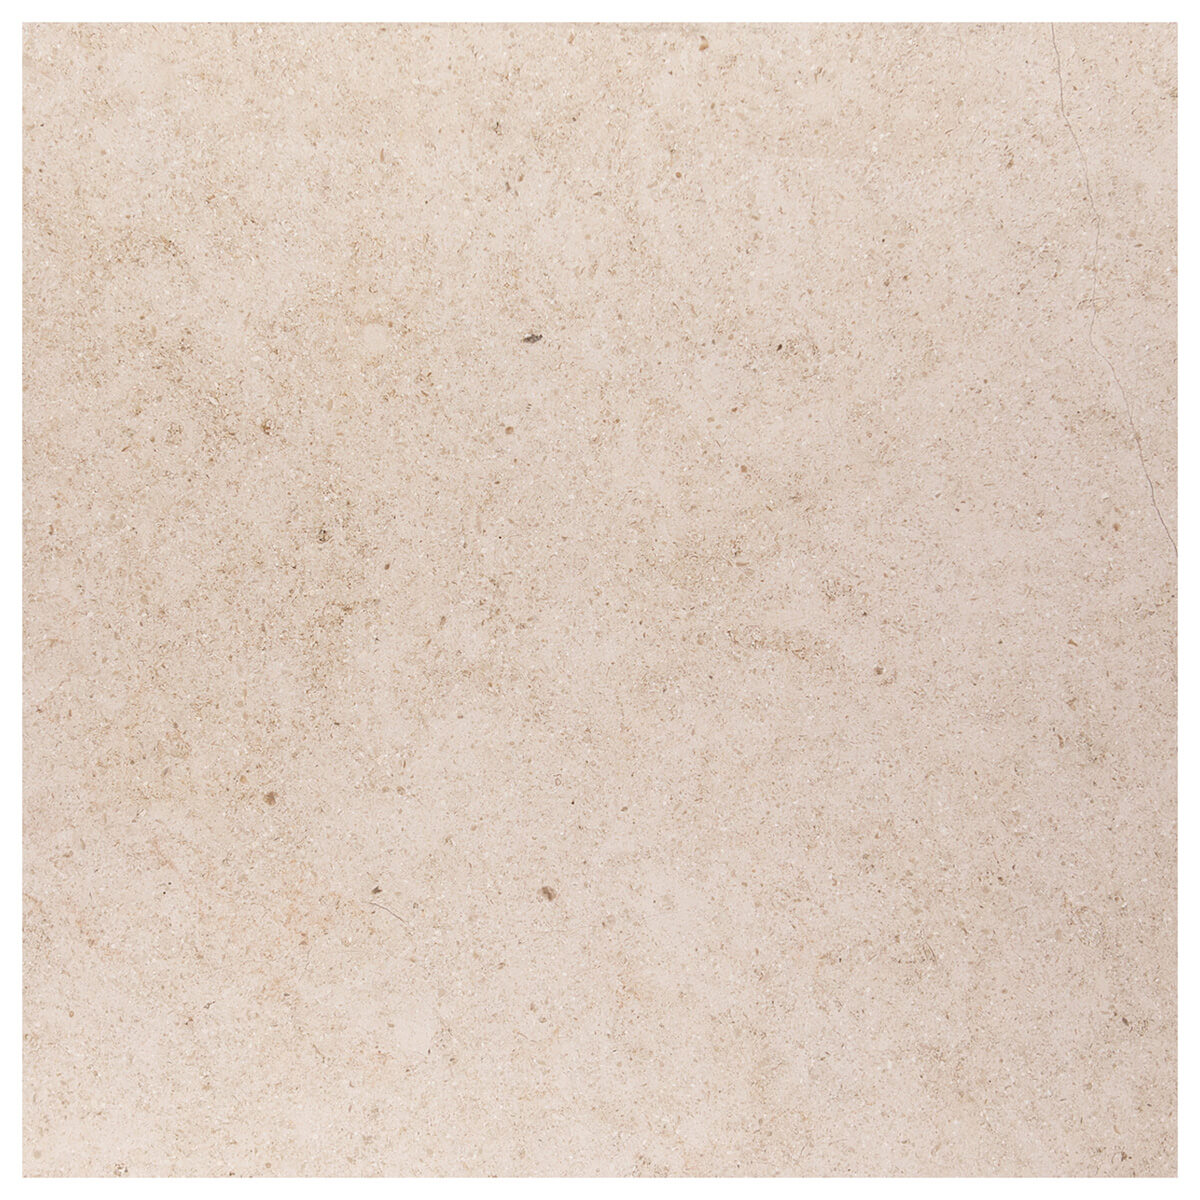 haussmann fonjone gascogne beige limestone square natural stone field tile 18x18 honed